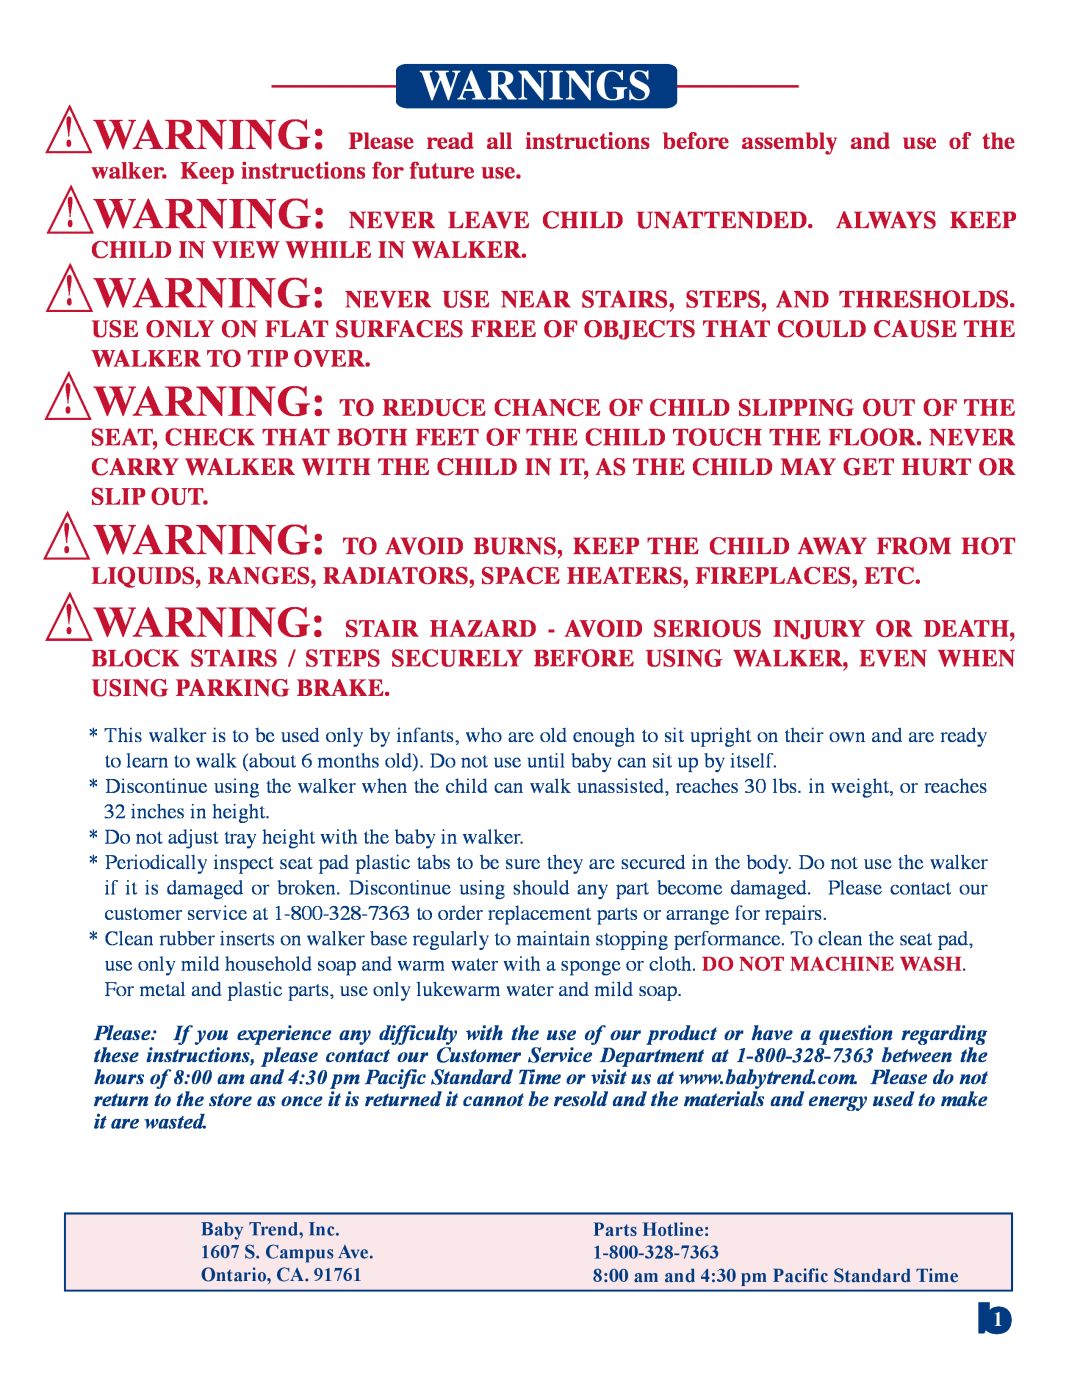 Baby Trend WK37, 3635 manual Warnings 